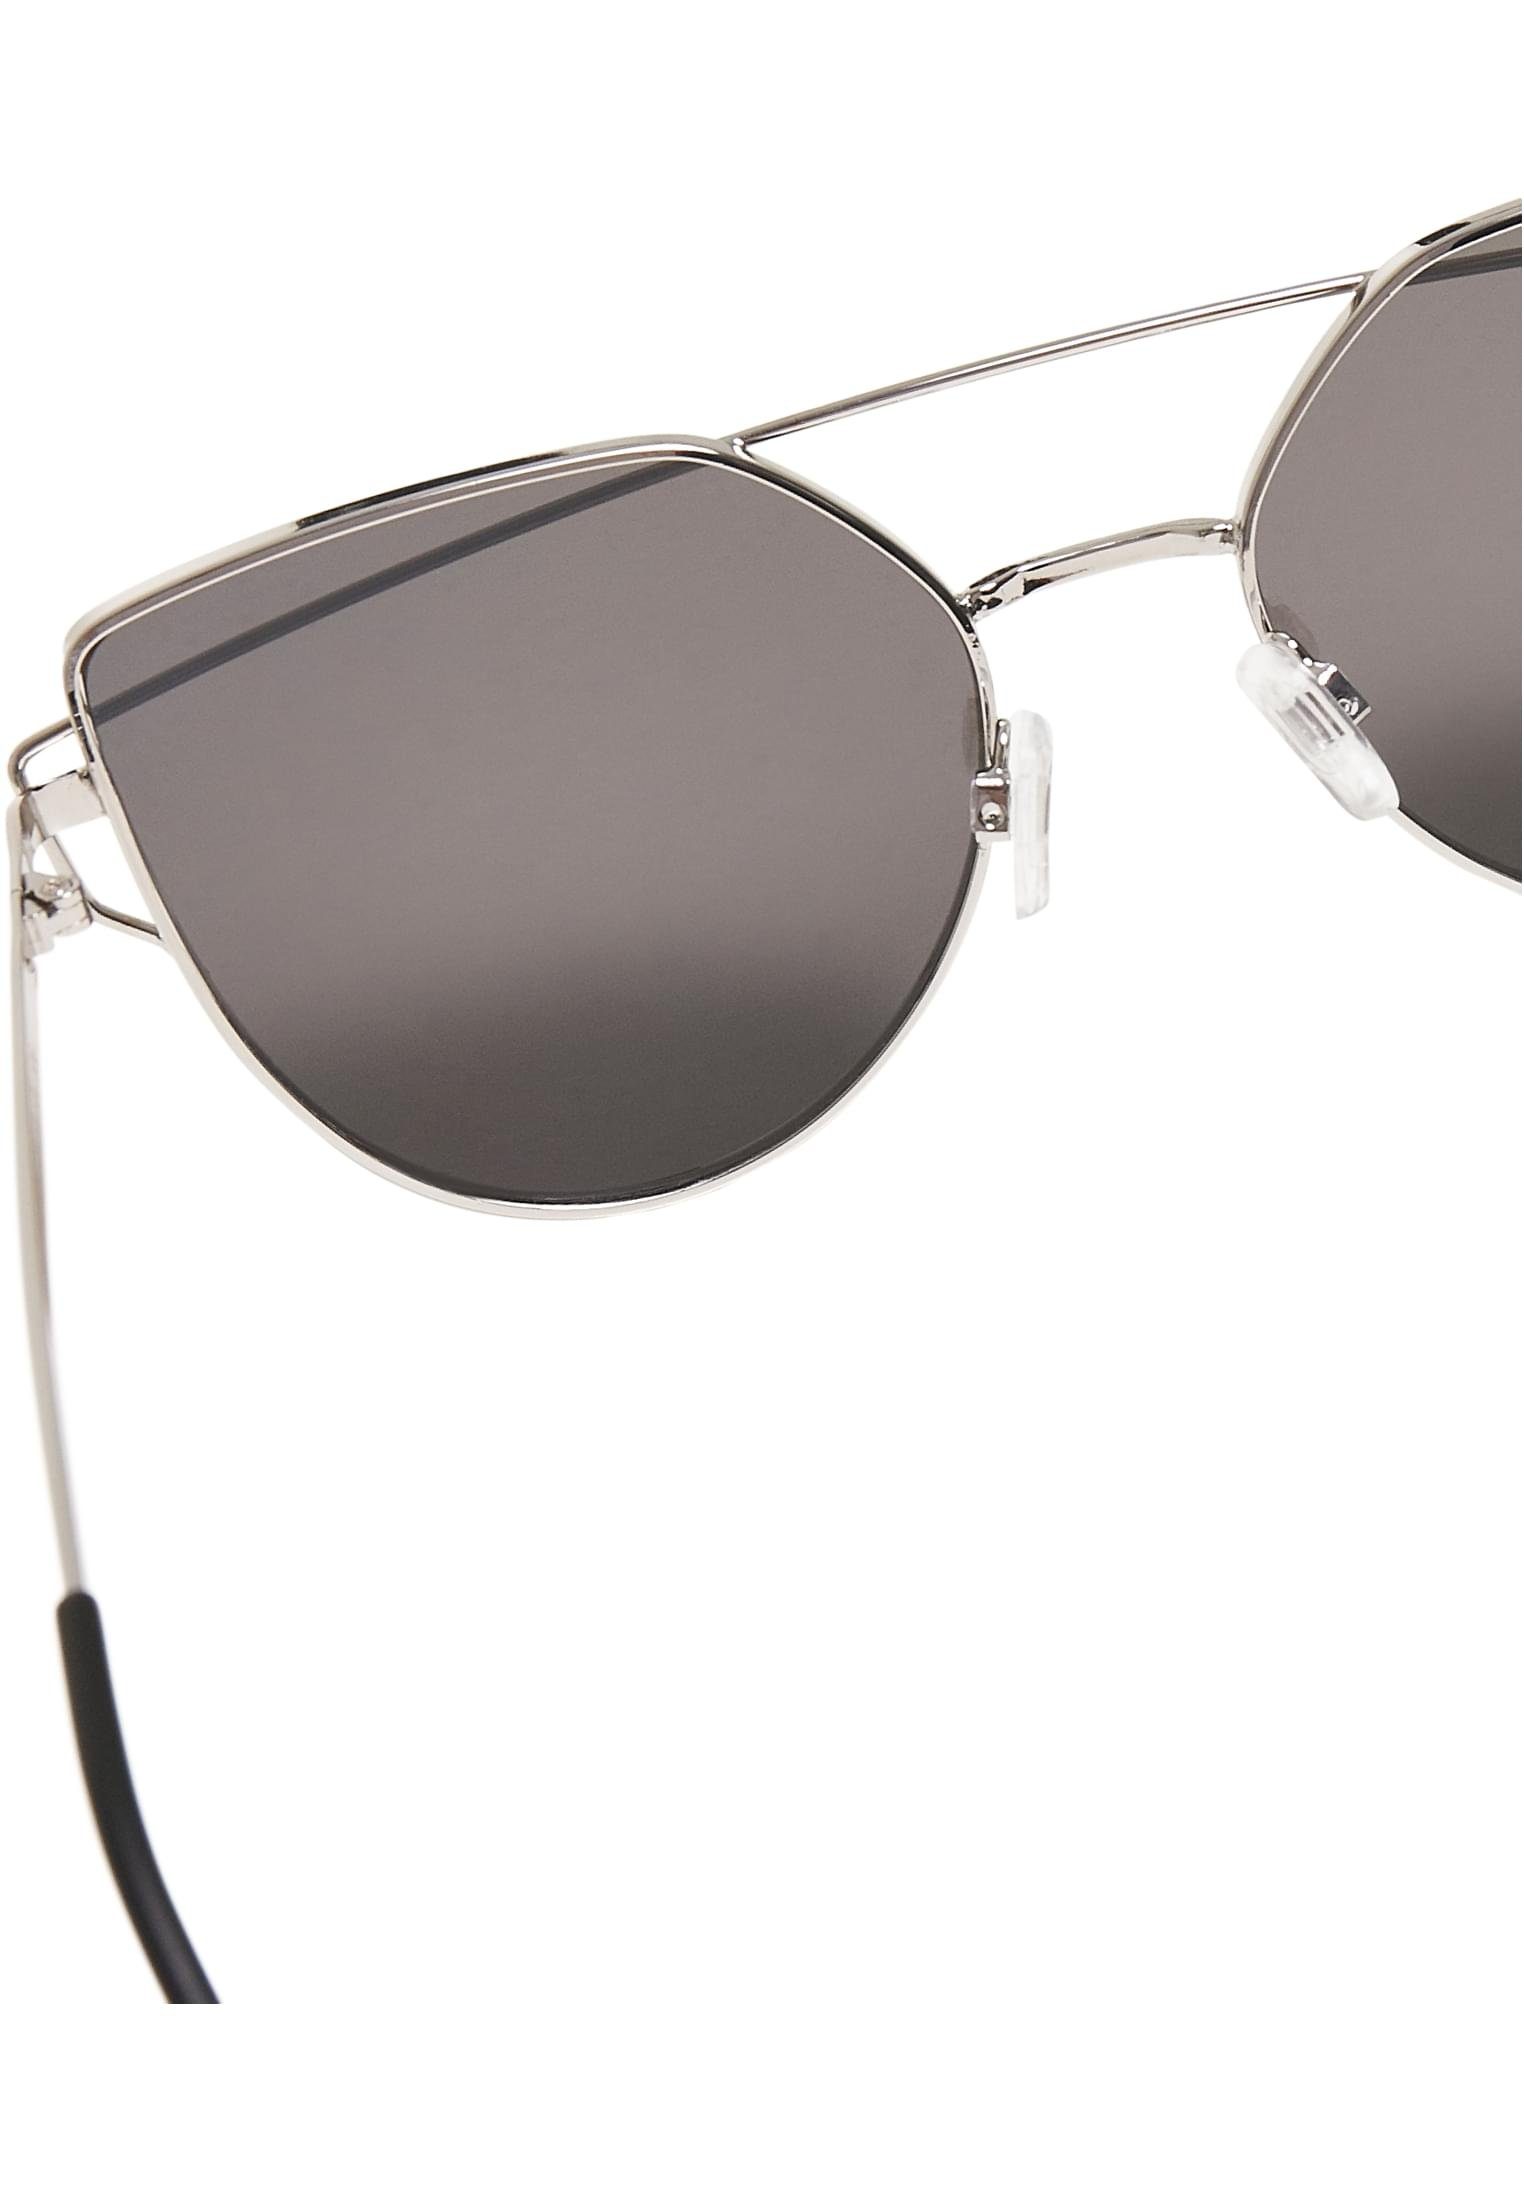 CLASSICS July Sonnenbrille silver UC URBAN Accessoires Sunglasses